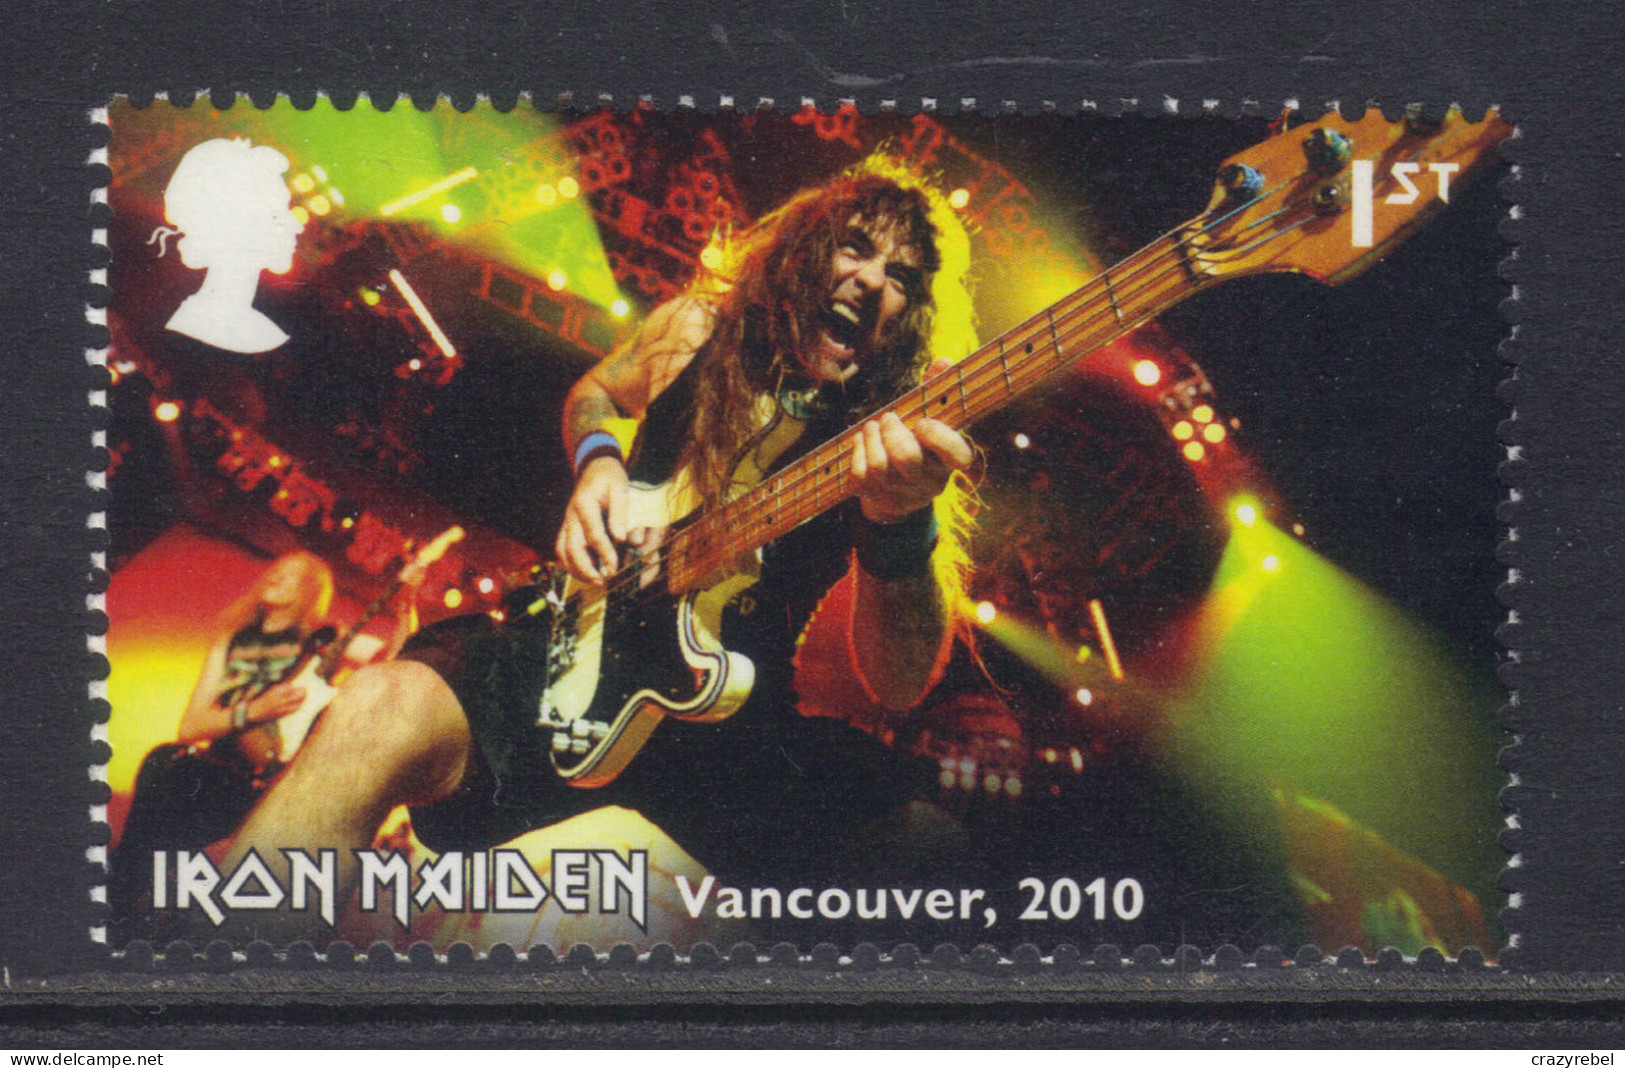 GB 2023 QE2 1st Iron Maiden Tour Vancouver 2010 Umm ( H787 ) - Unused Stamps